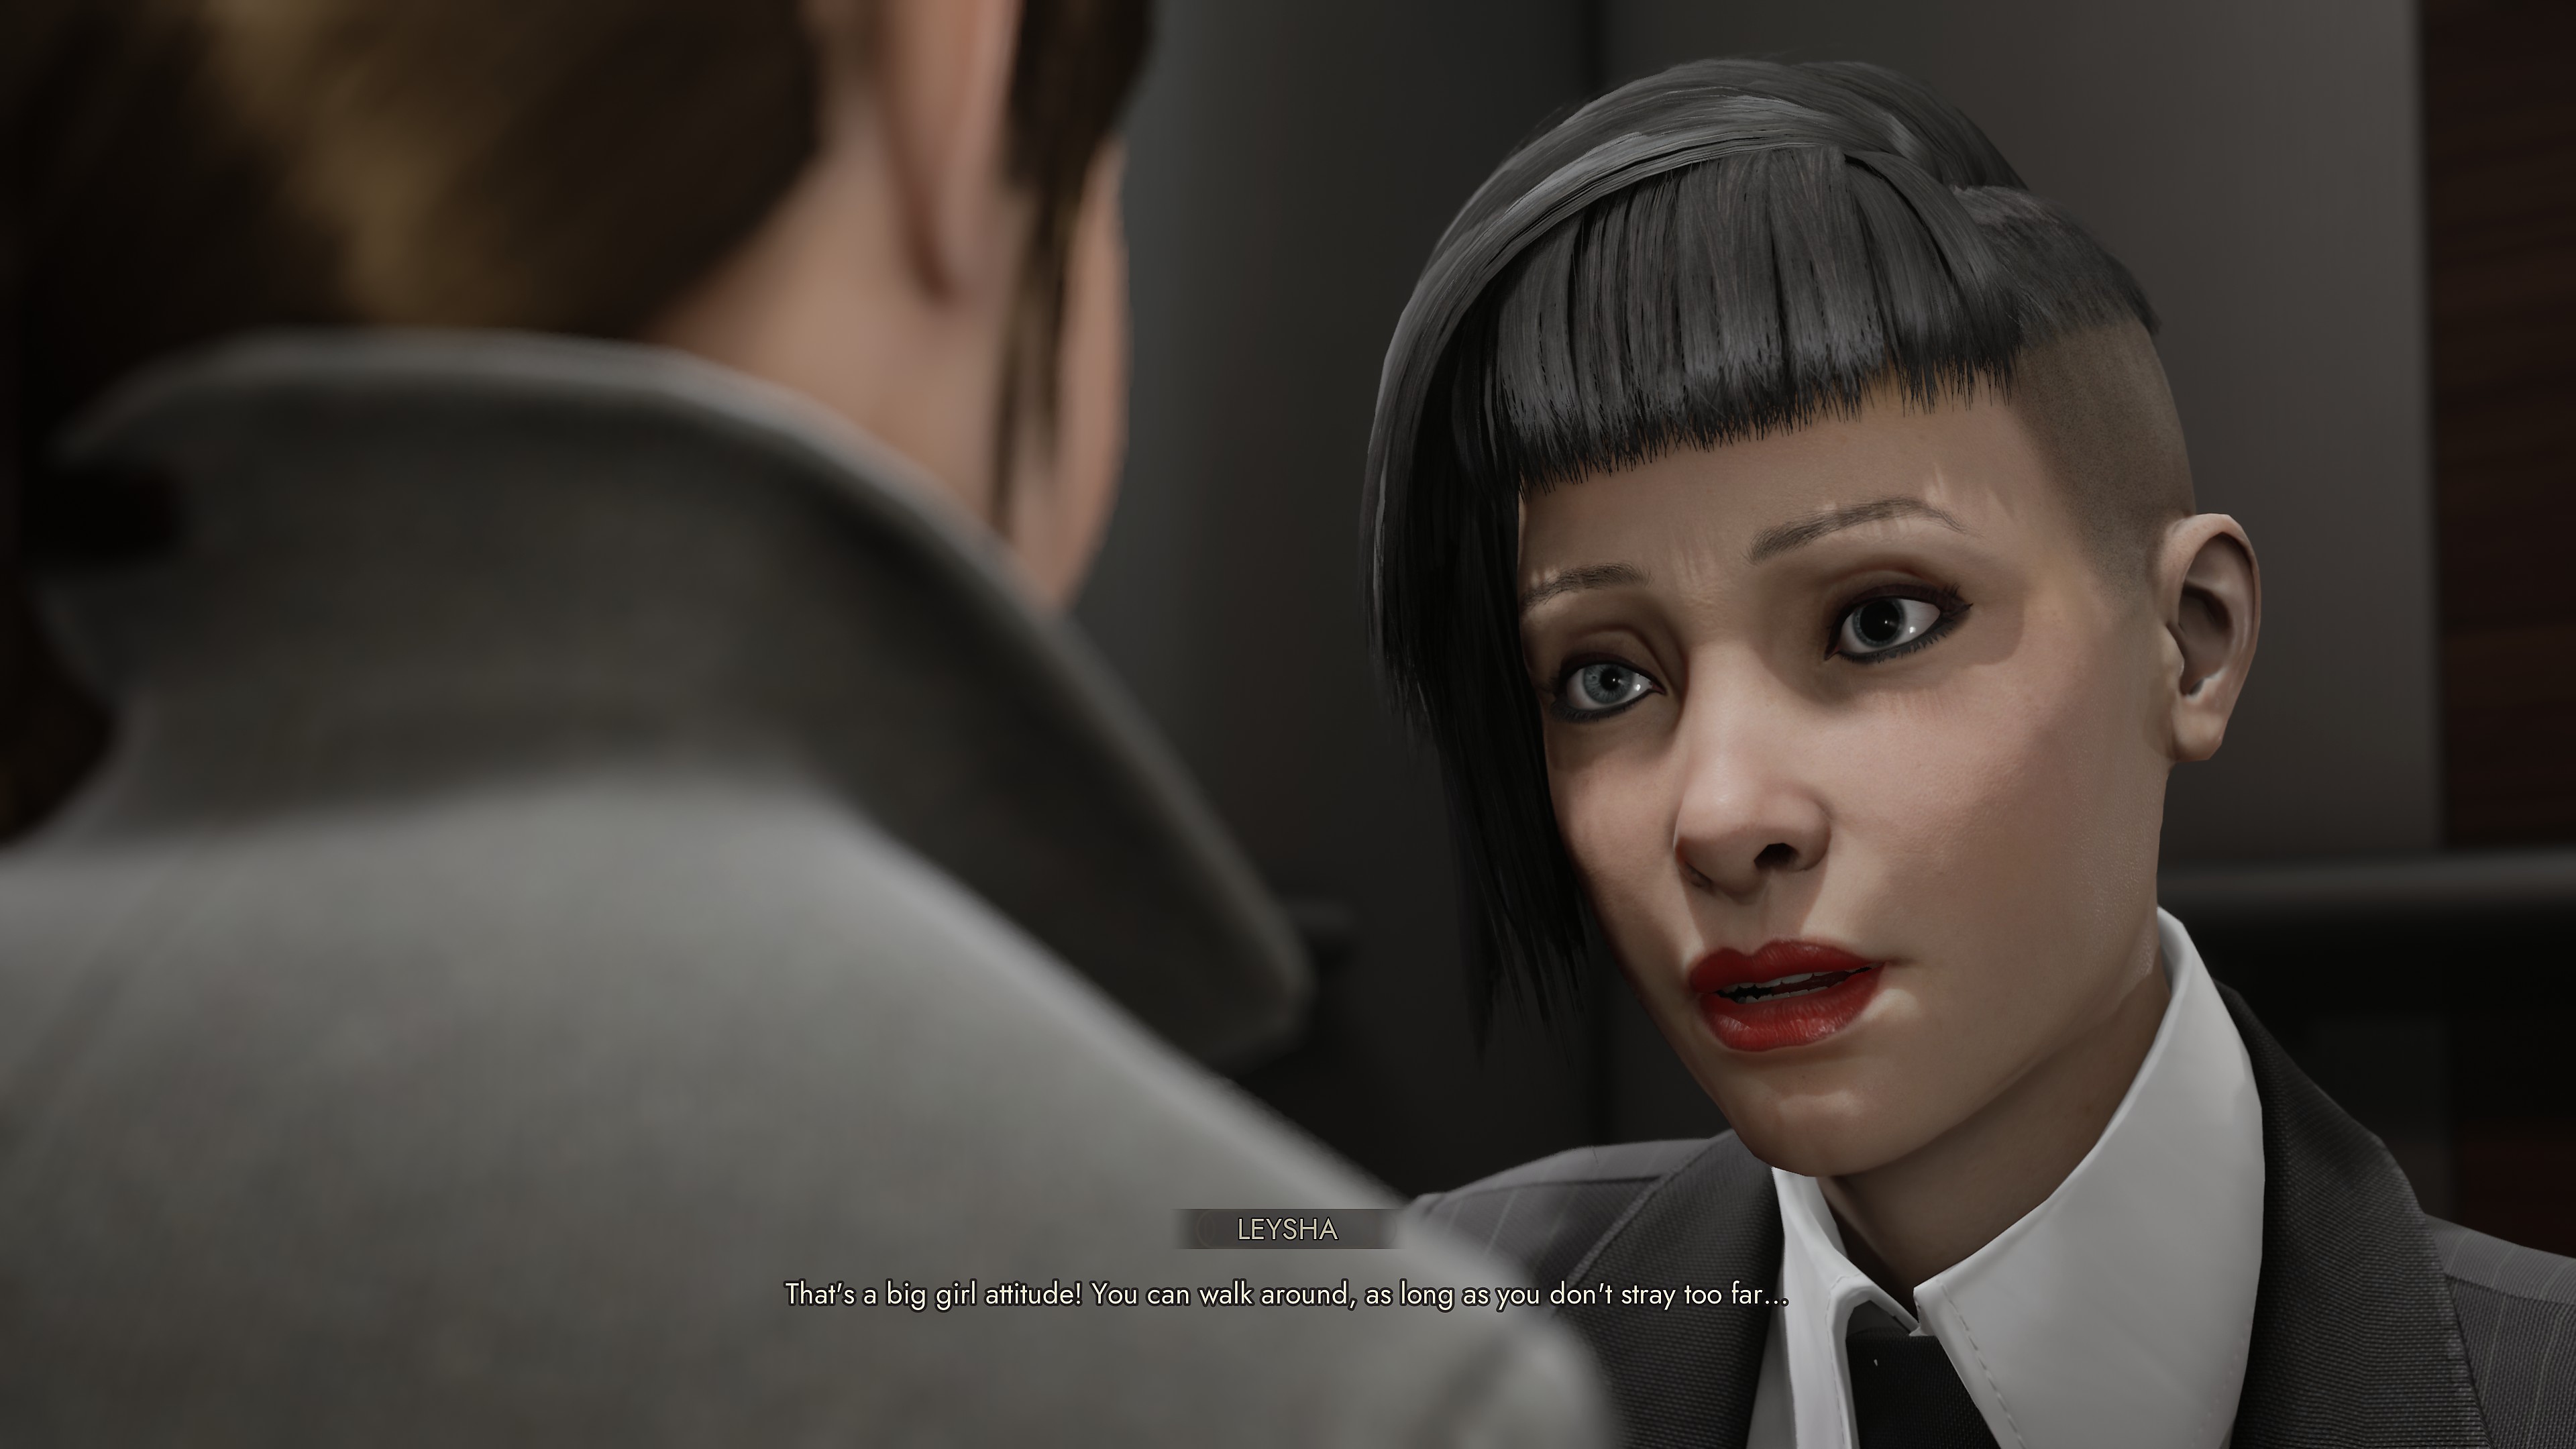 Vampire: The Masquerade - Swansong screenshot showing two characters interacting